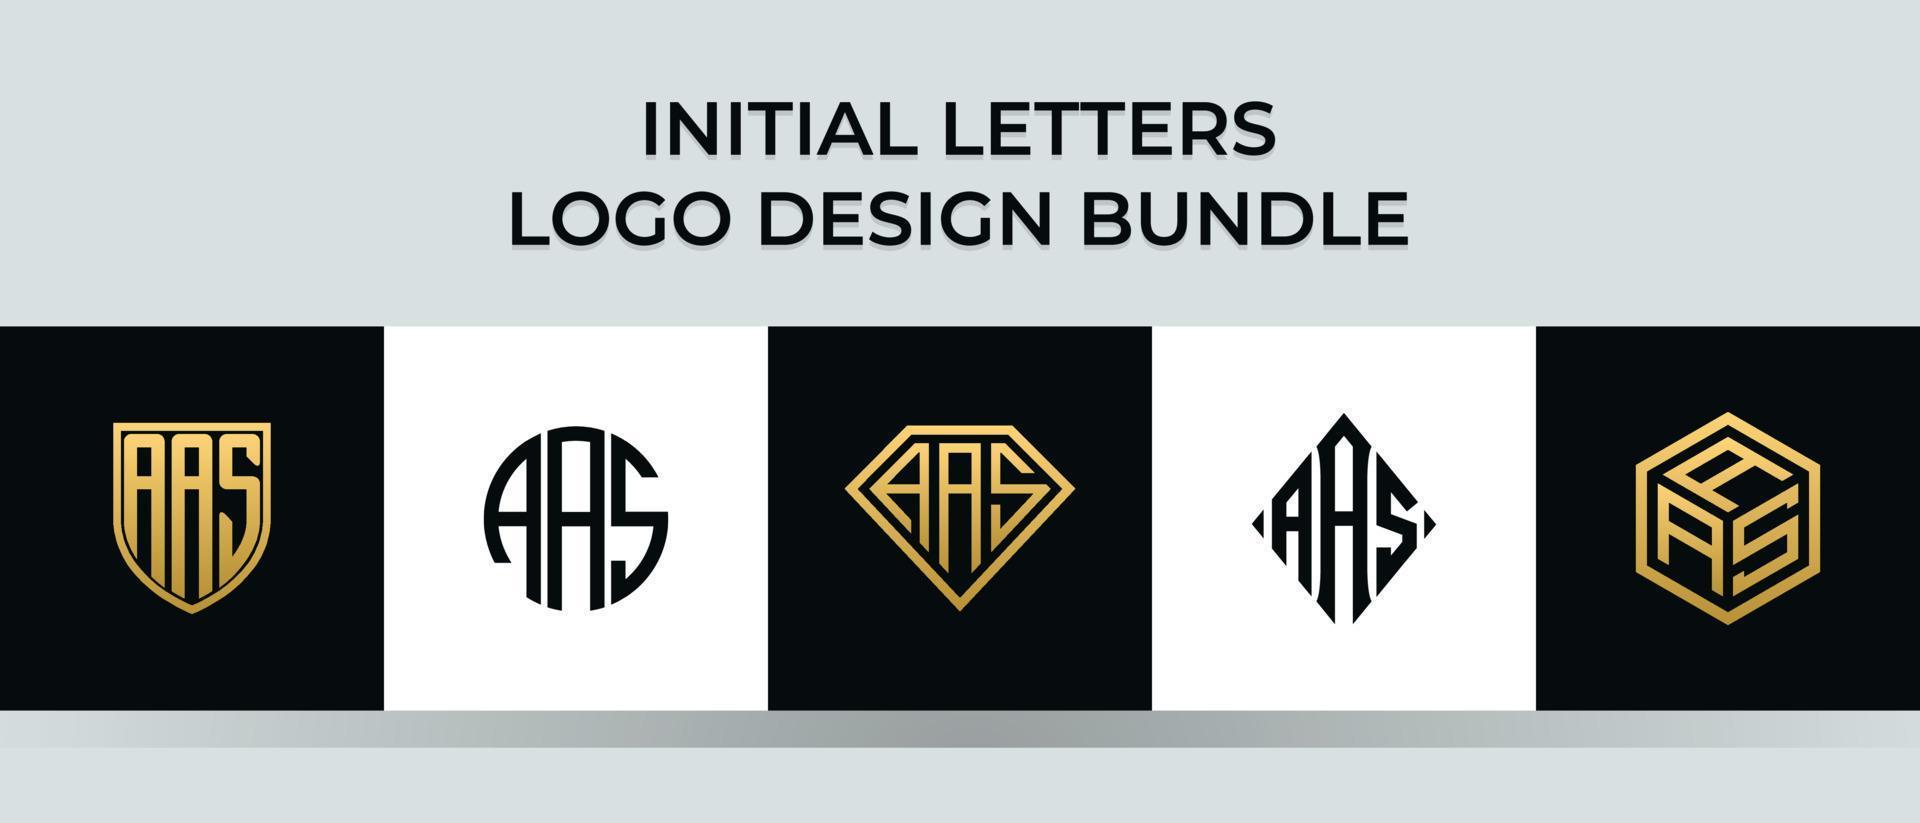 Anfangsbuchstaben aas Logo Designs Bundle vektor